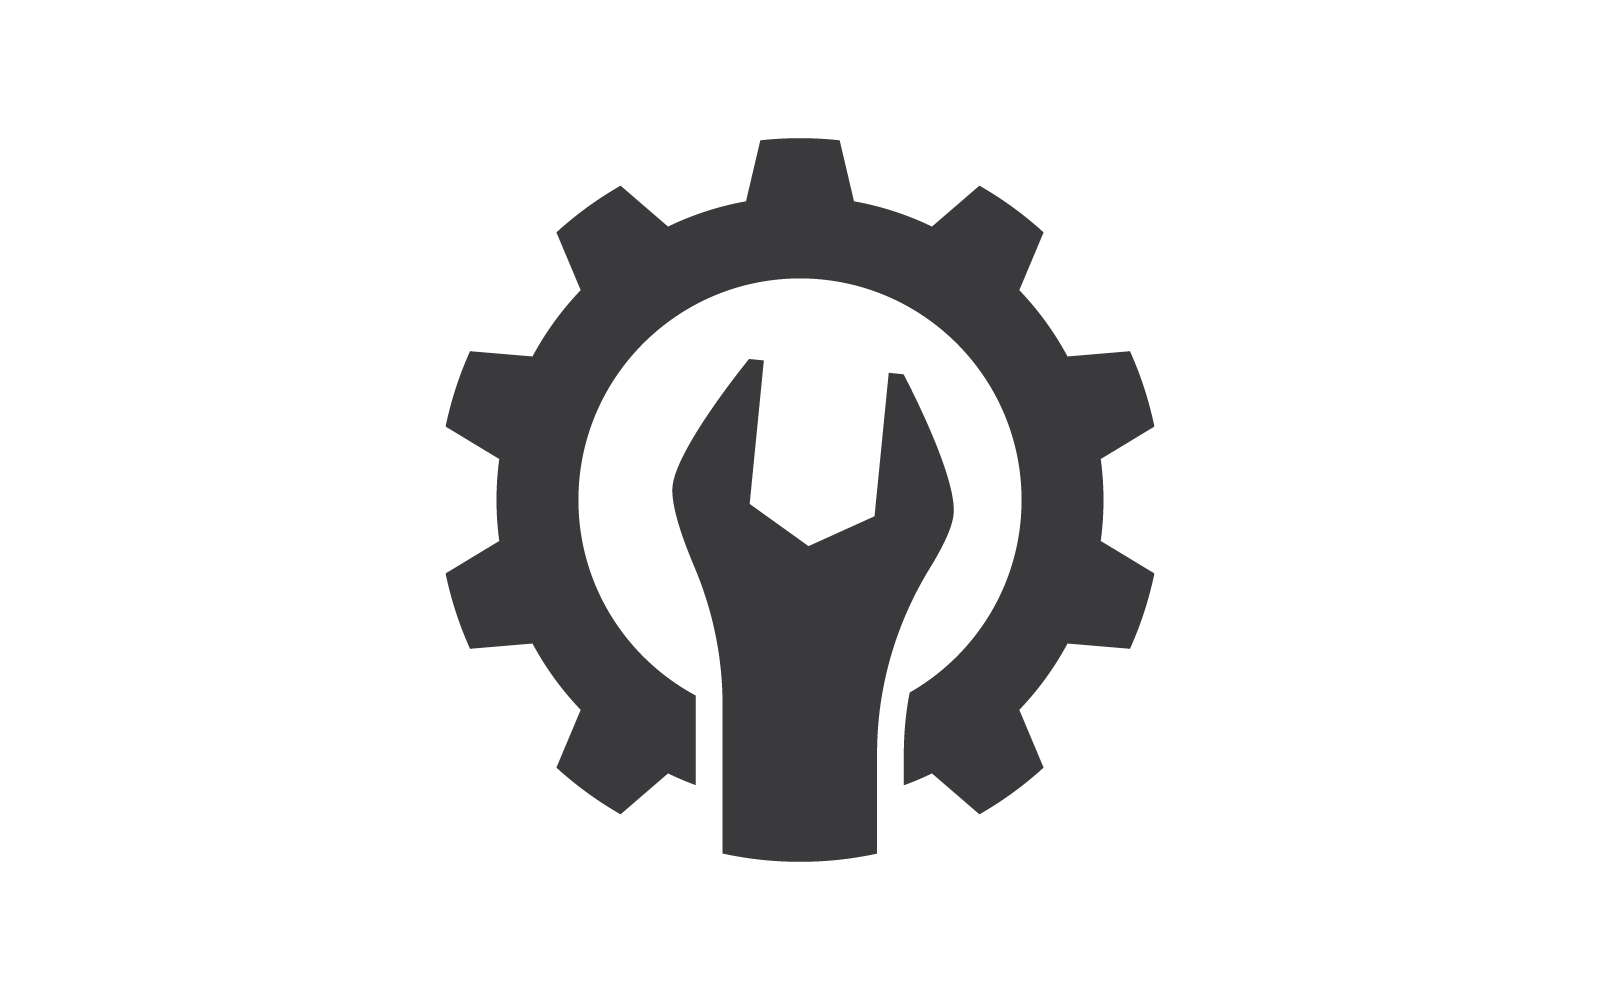 Wrench logo icon vector flat design